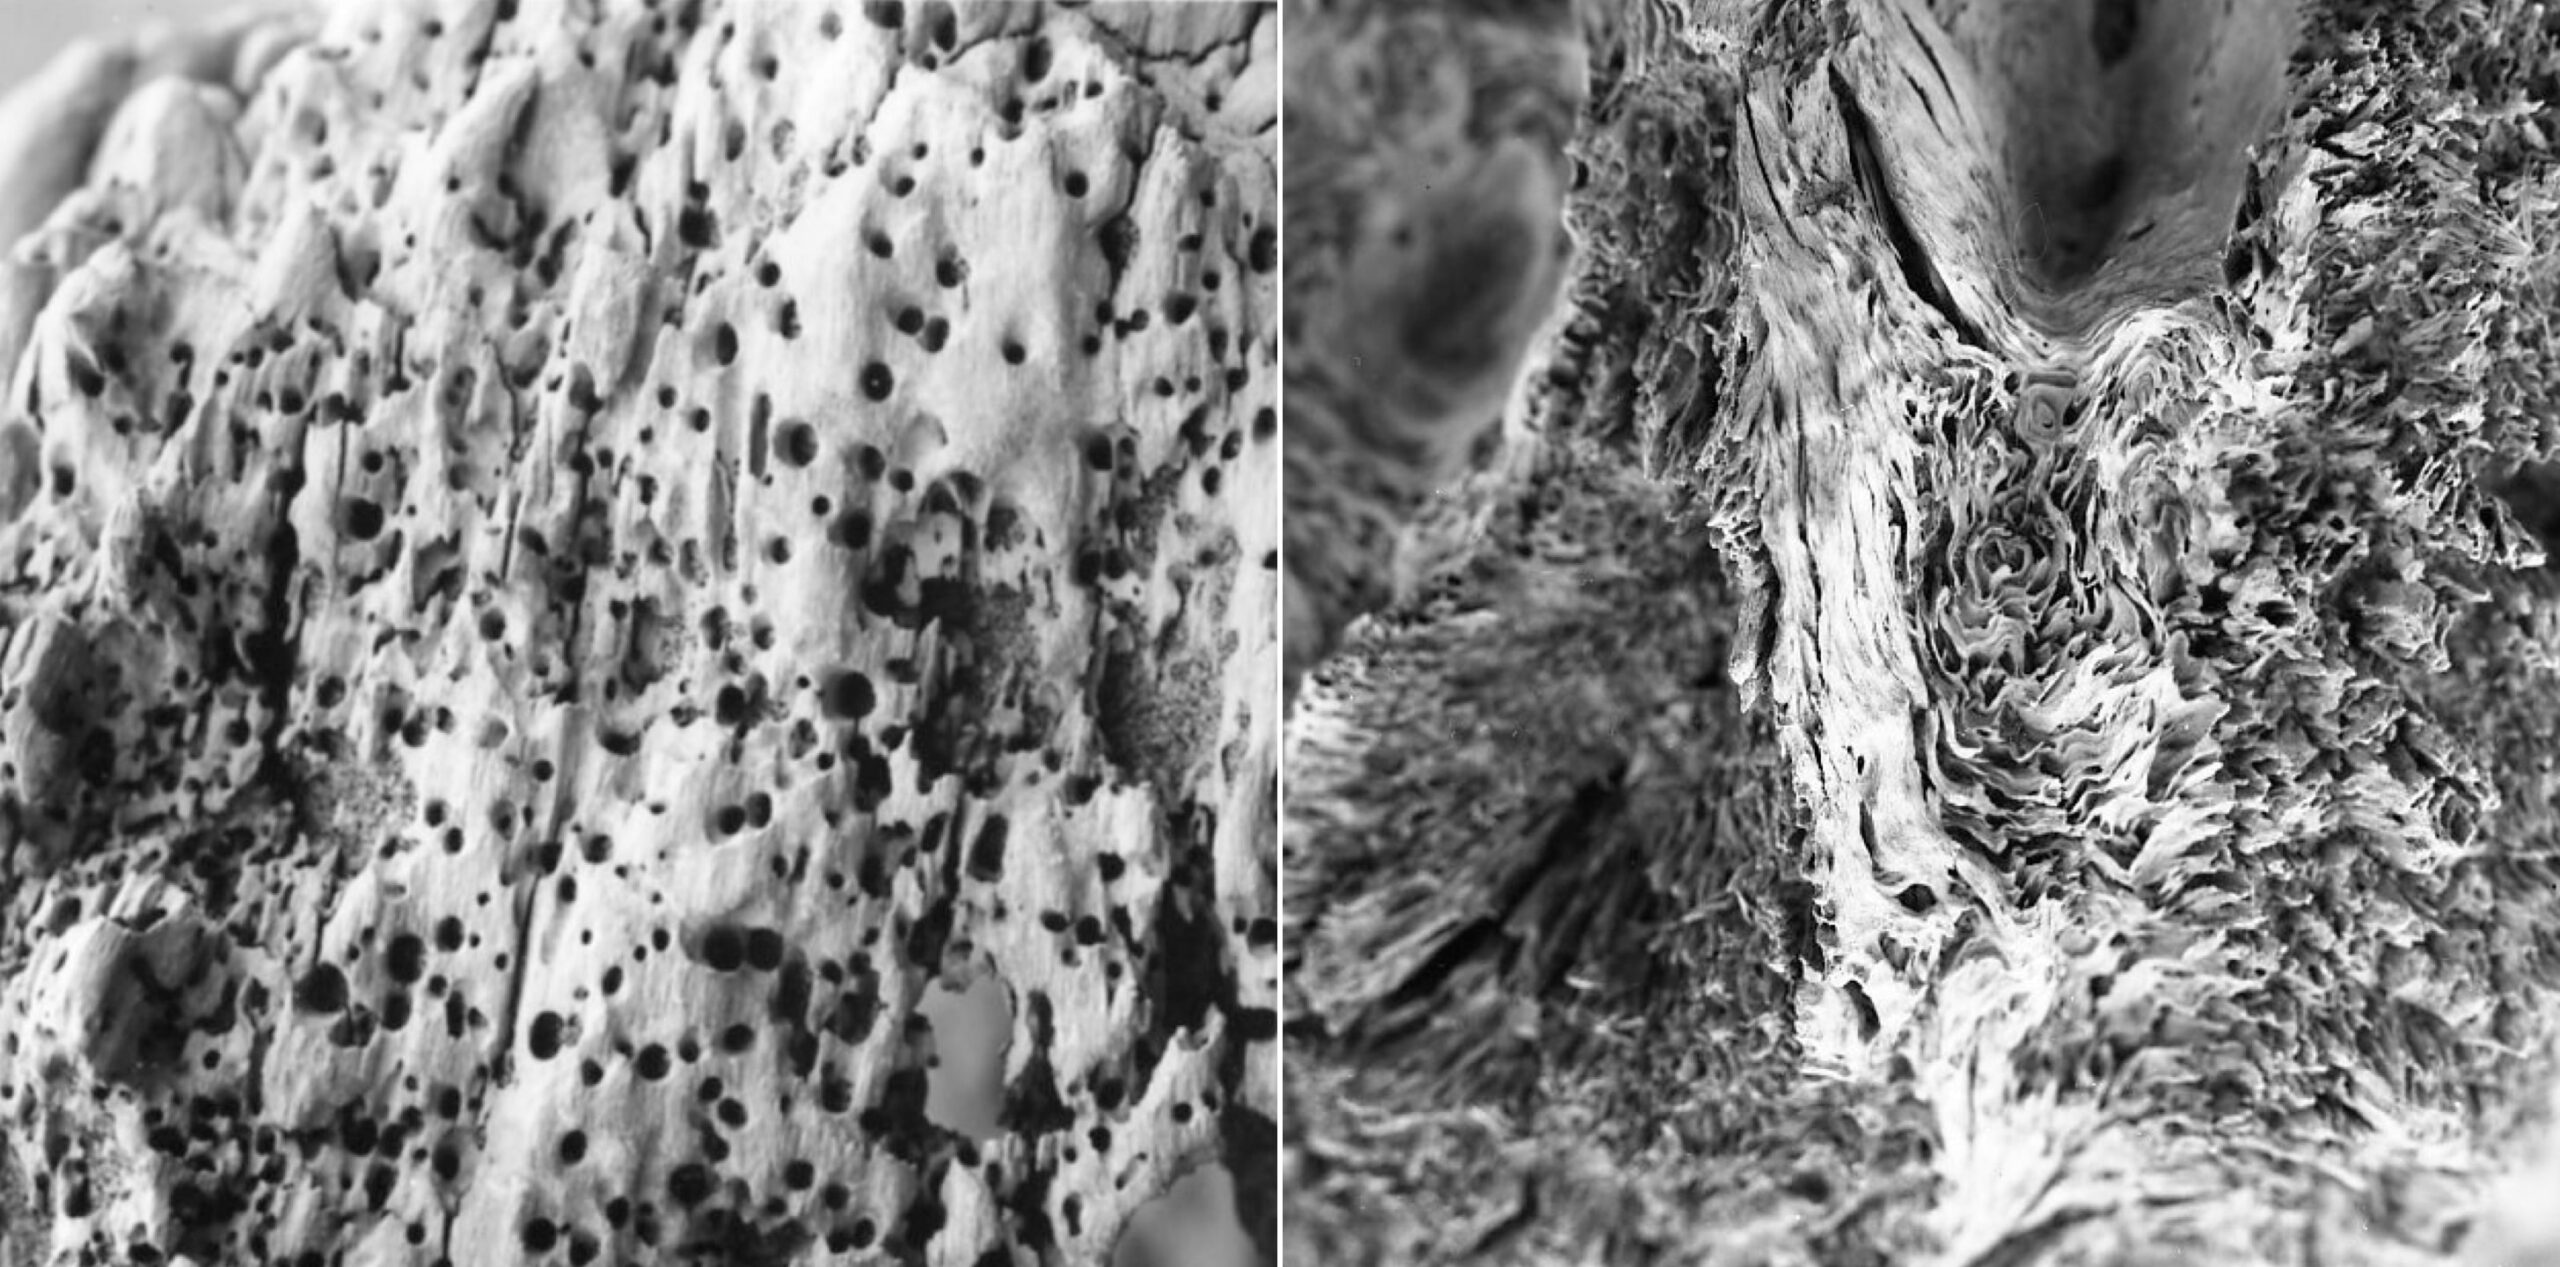 Links: Detailaufnahme einer Hölzernen Oberfläche (um 1959). Foto: Otl Aicher. © Florian Aicher Rotis, HfG-Archiv / Museum Ulm. HfG-Ar Ai F 0413. Rechts: Detailaufnahme einer faserigen Holzstruktur (um 1959). Foto: Otl Aicher. © Florian Aicher Rotis, HfG-Archiv / Museum Ulm. HfG-Ar Ai F 0545.